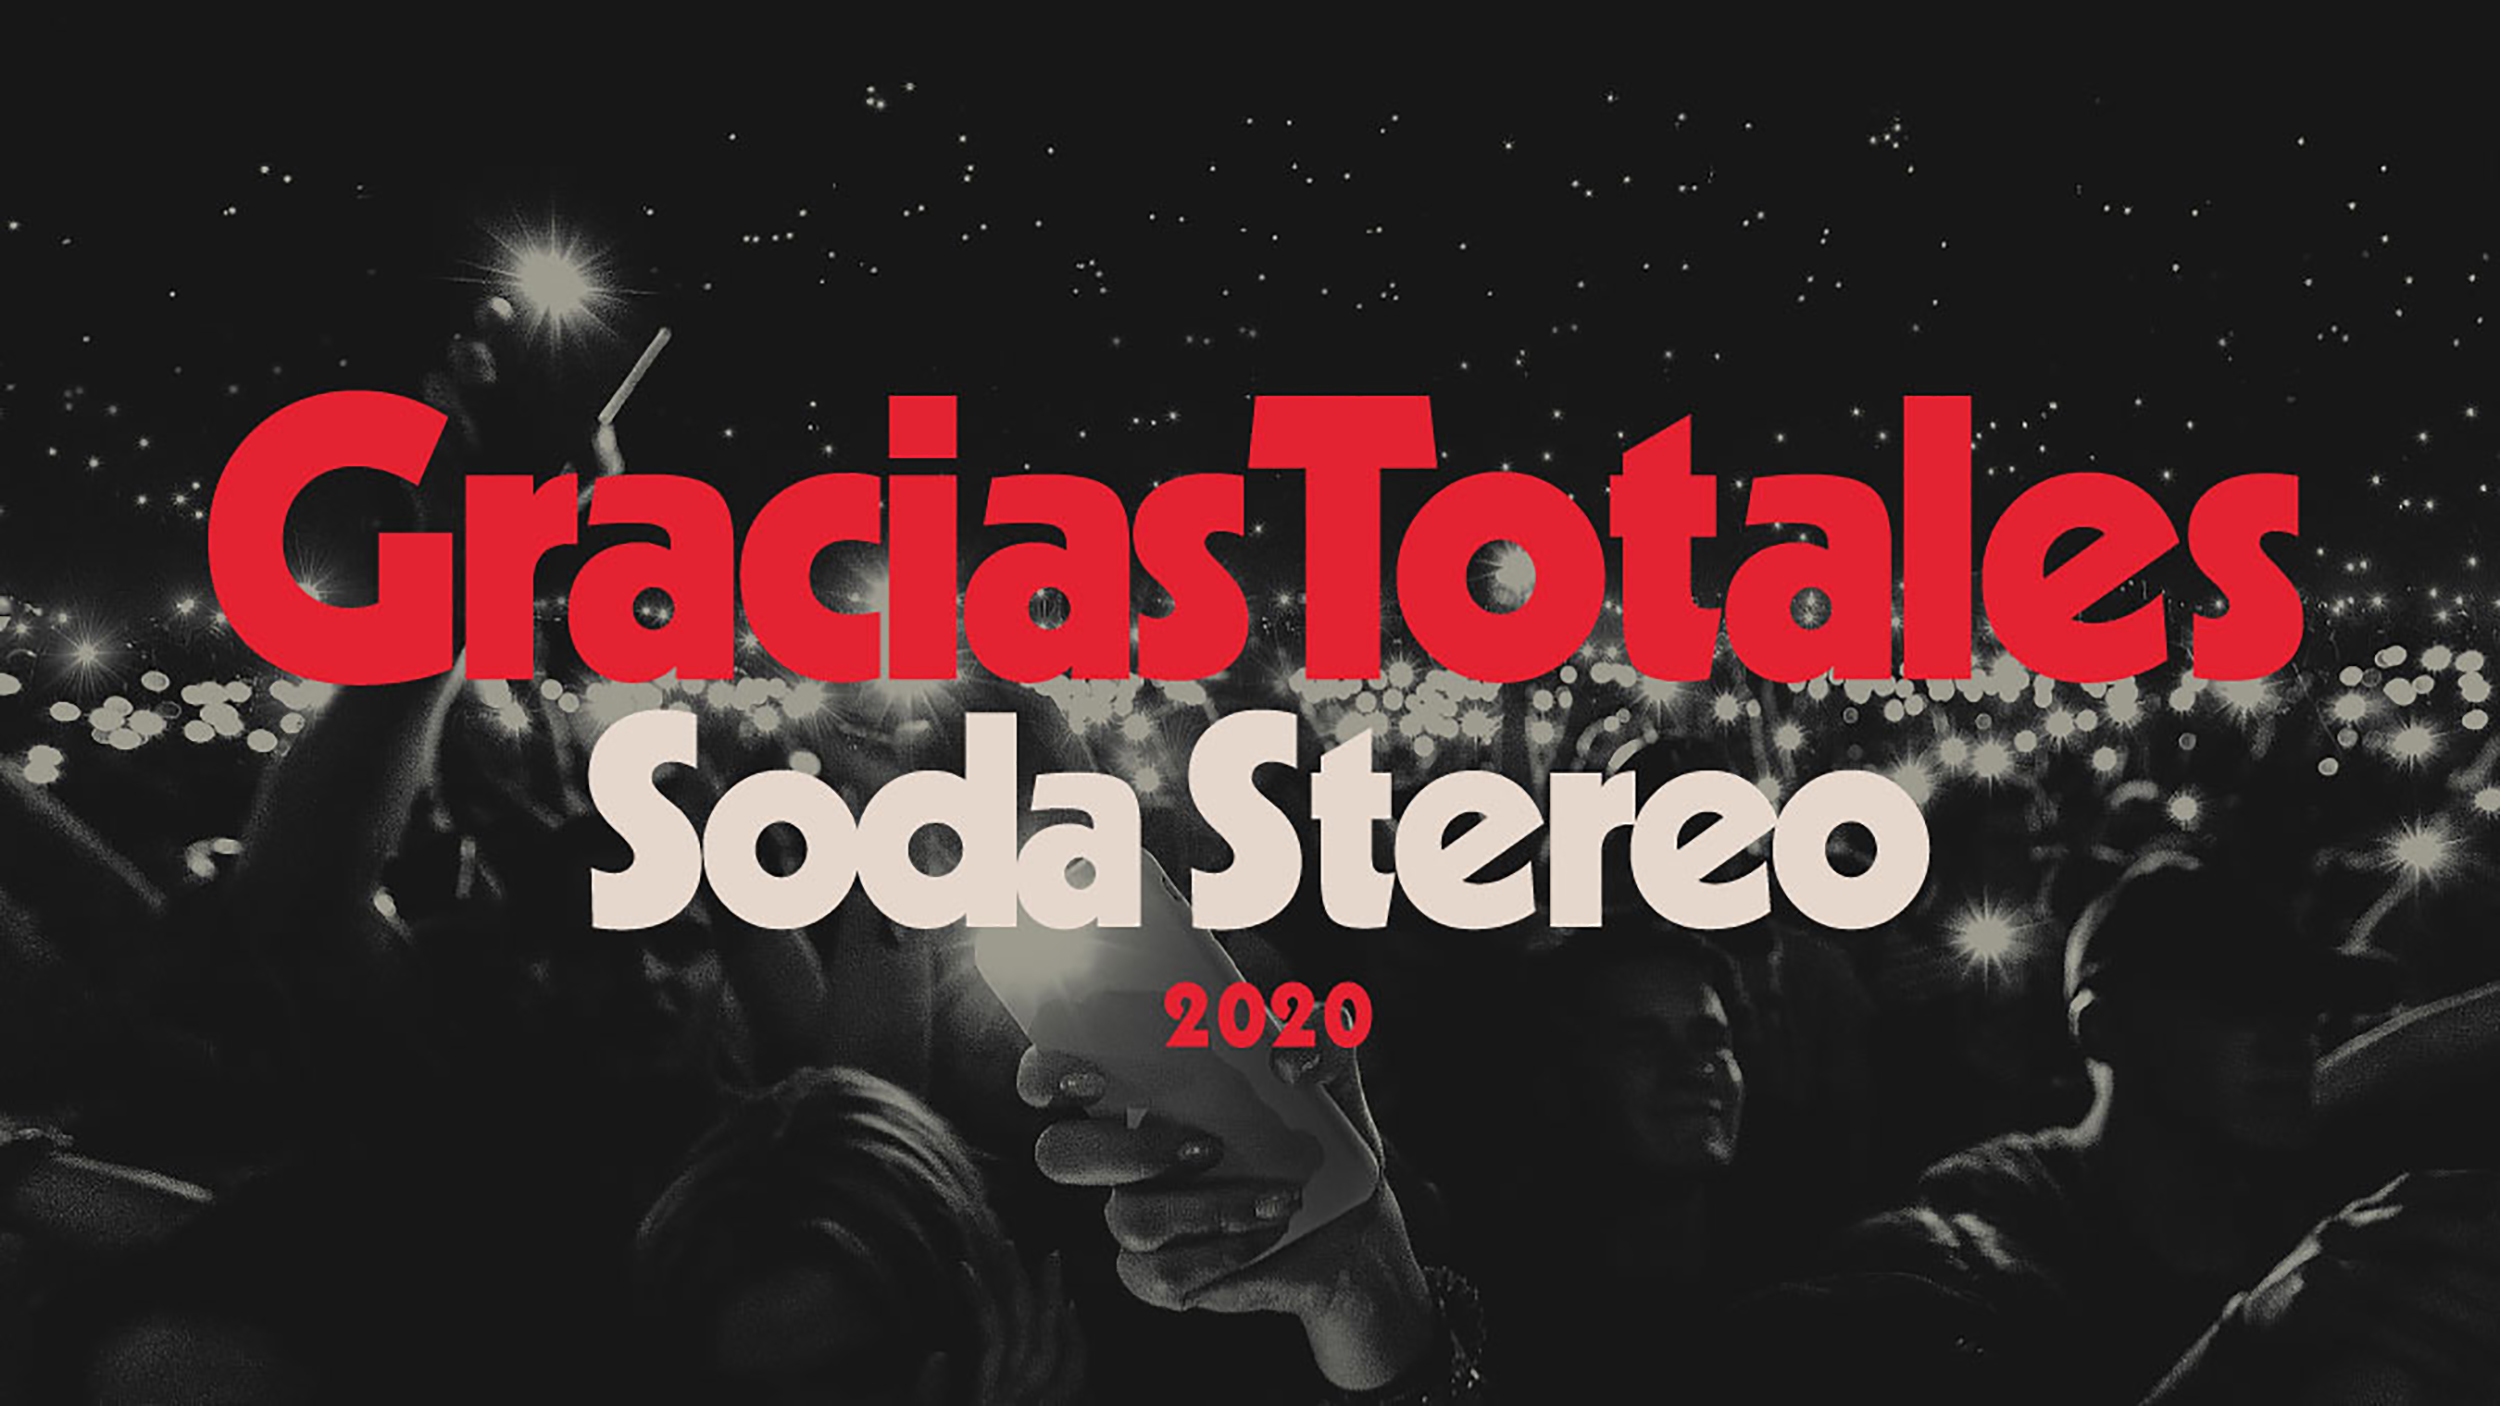 Gracias Totales Soda Stereo